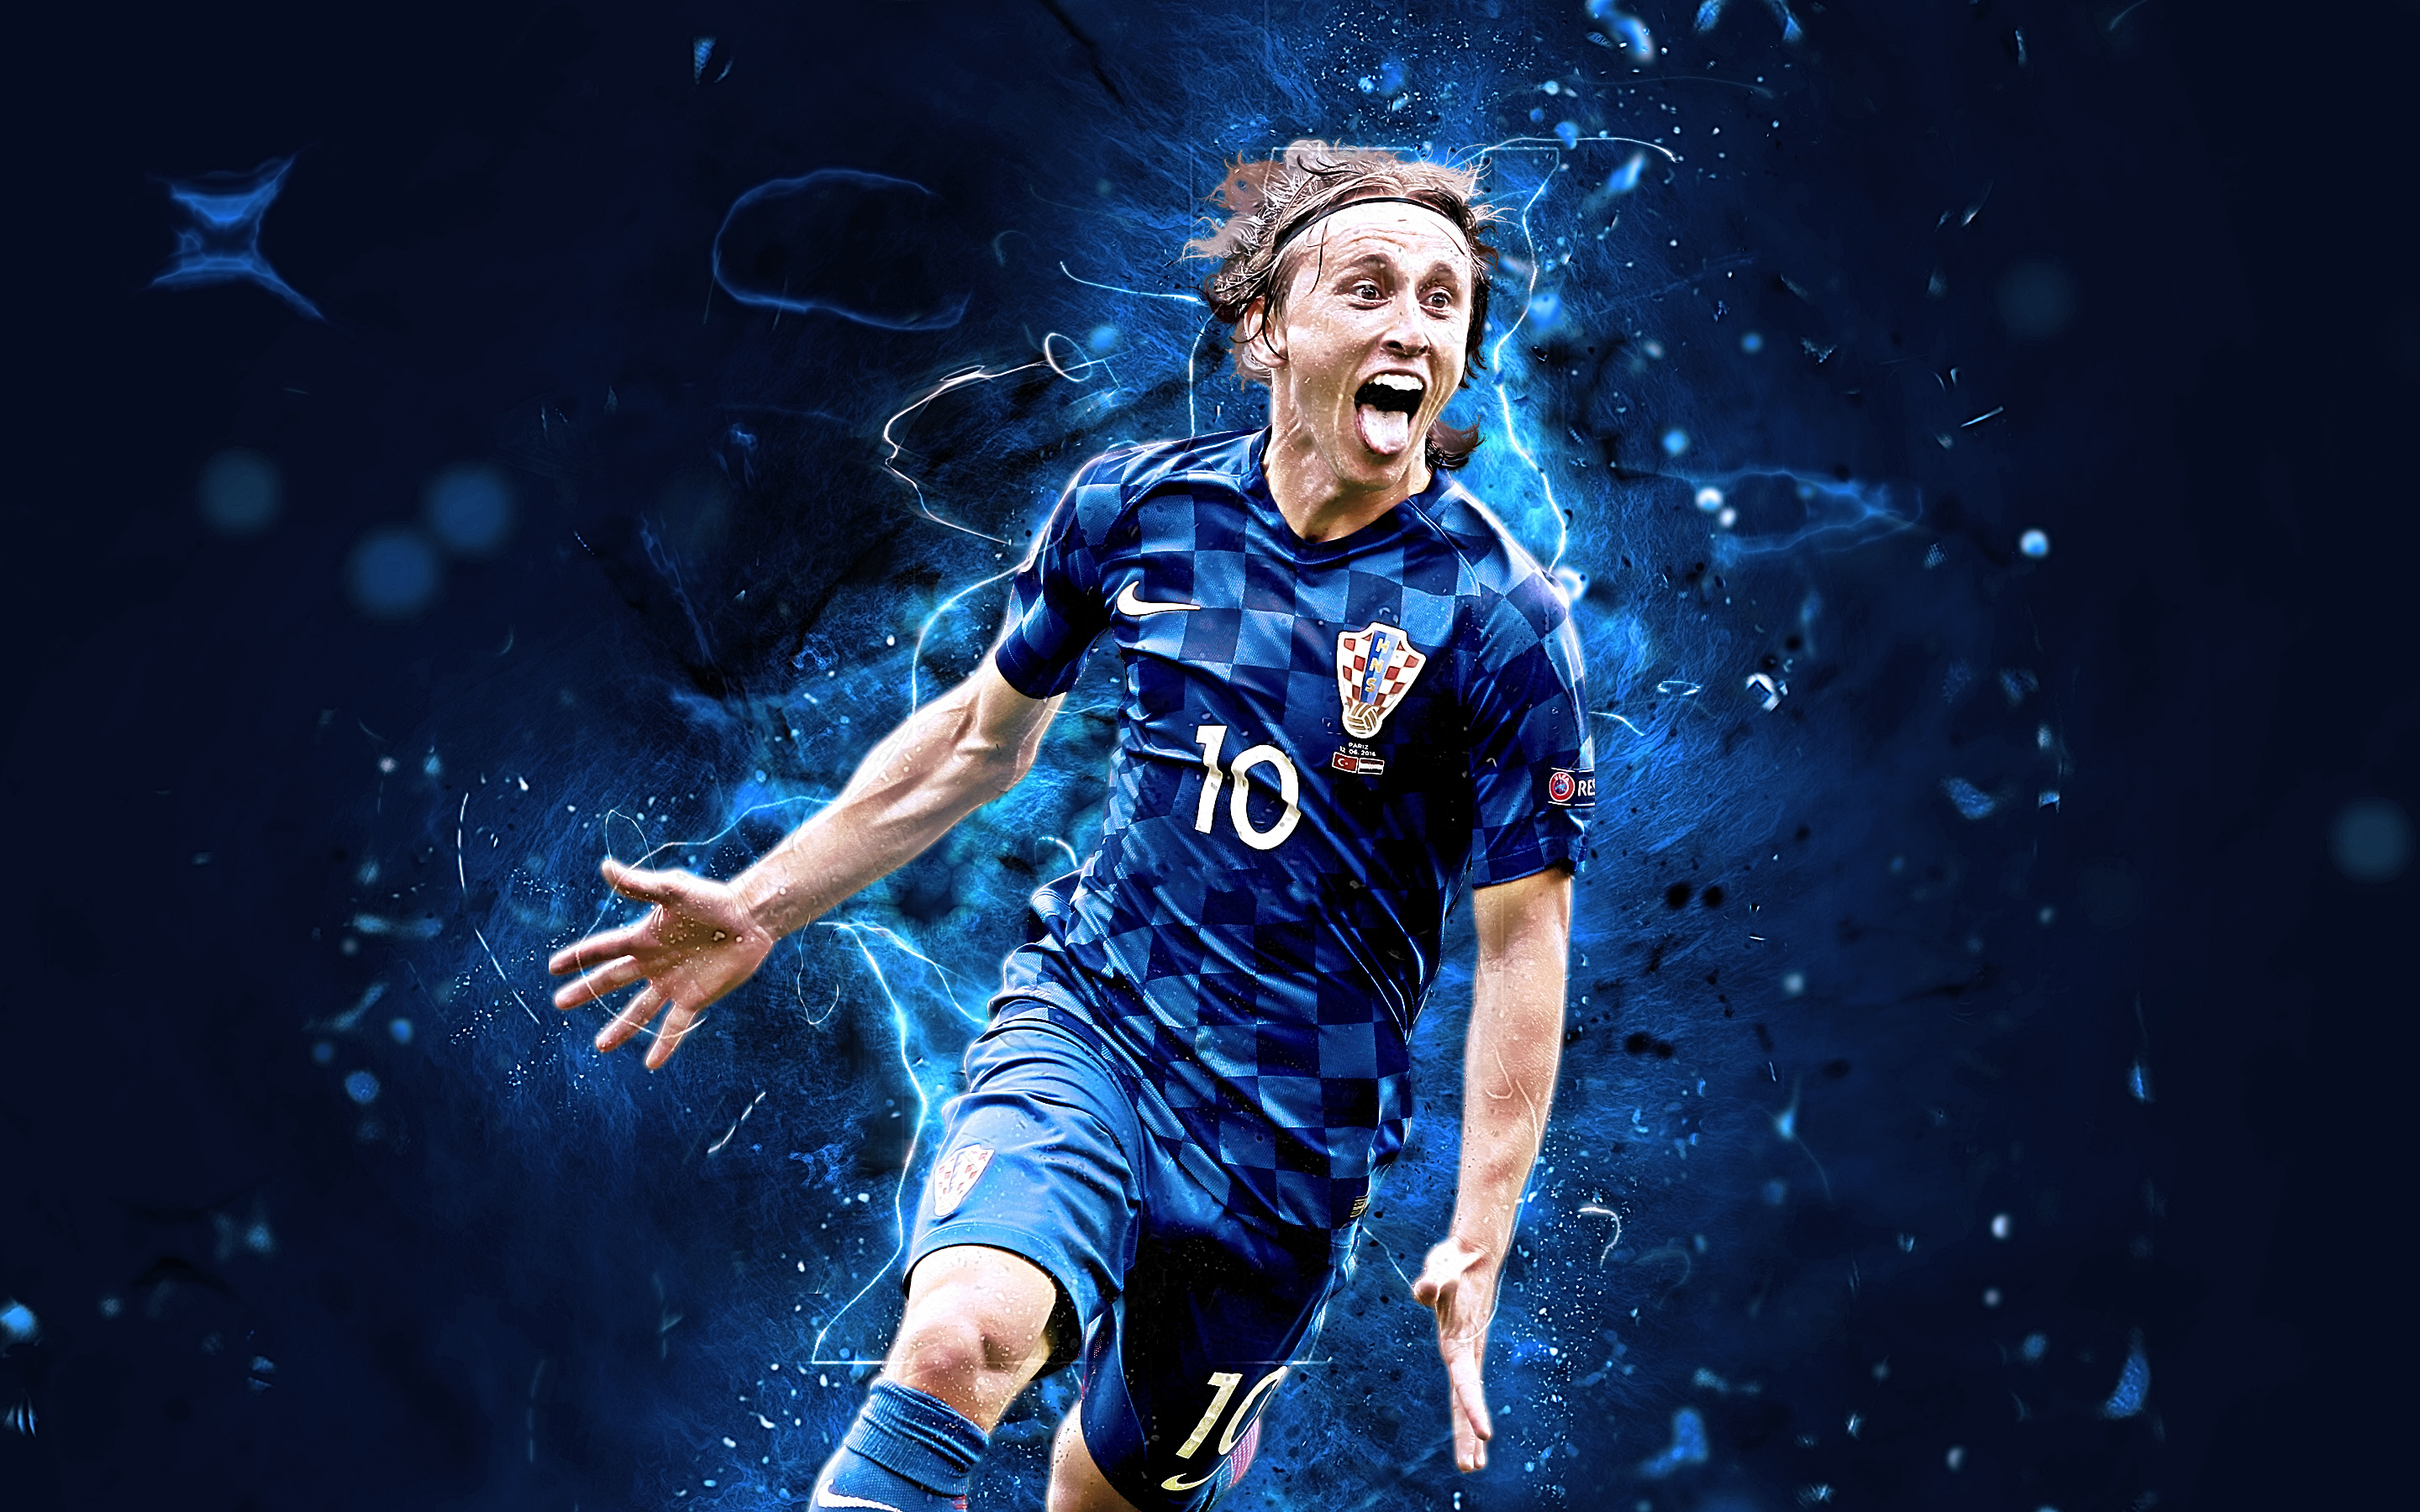 Luka Modric Football Wallpaper